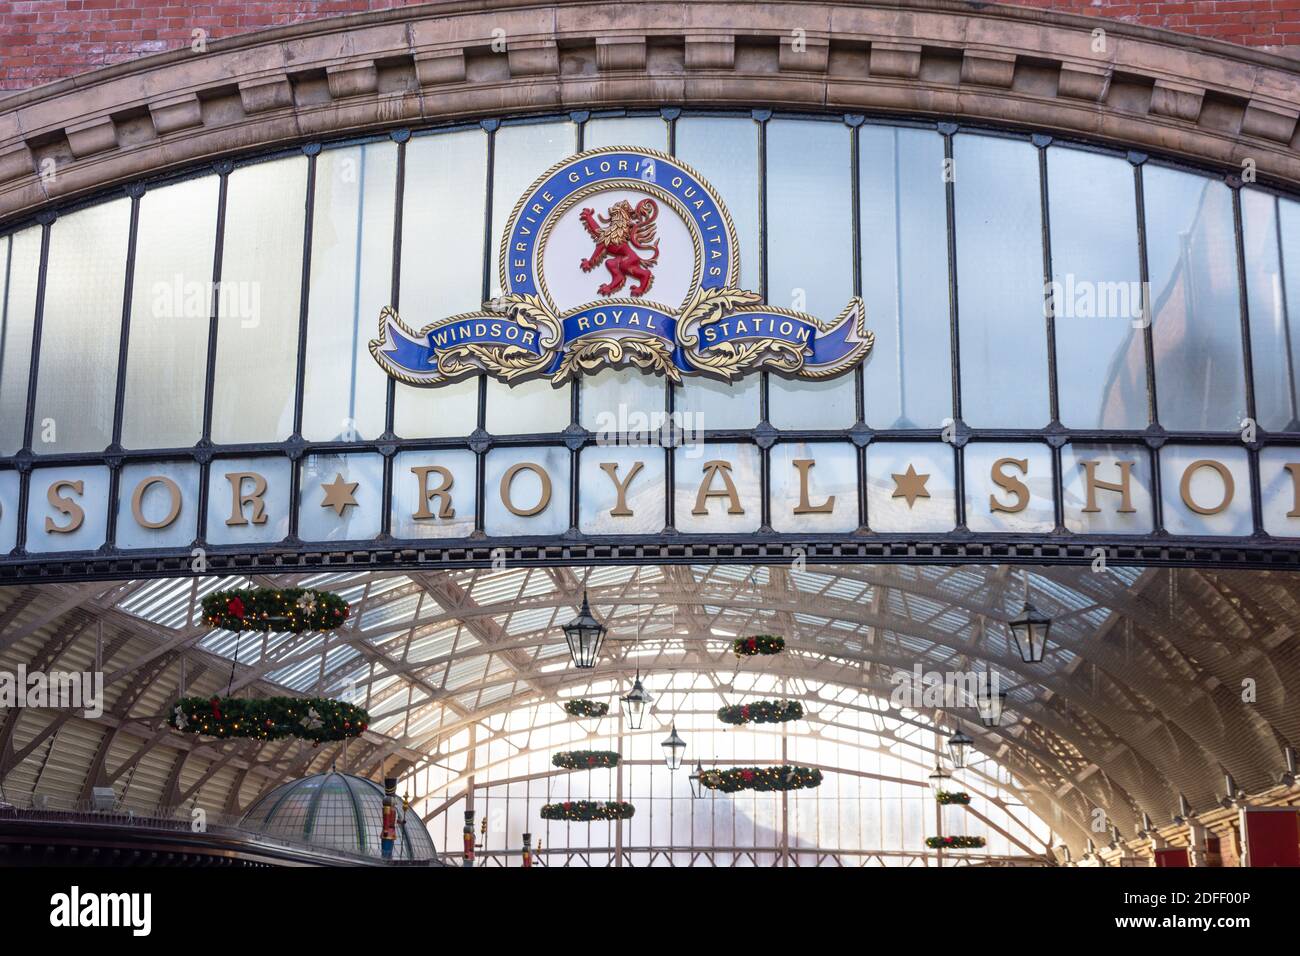 Windsor Royal Shopping Arcade entrance at Christmas, Windsor Royal Station, Windsor, Berkshire, England, United Kingdom Stock Photo